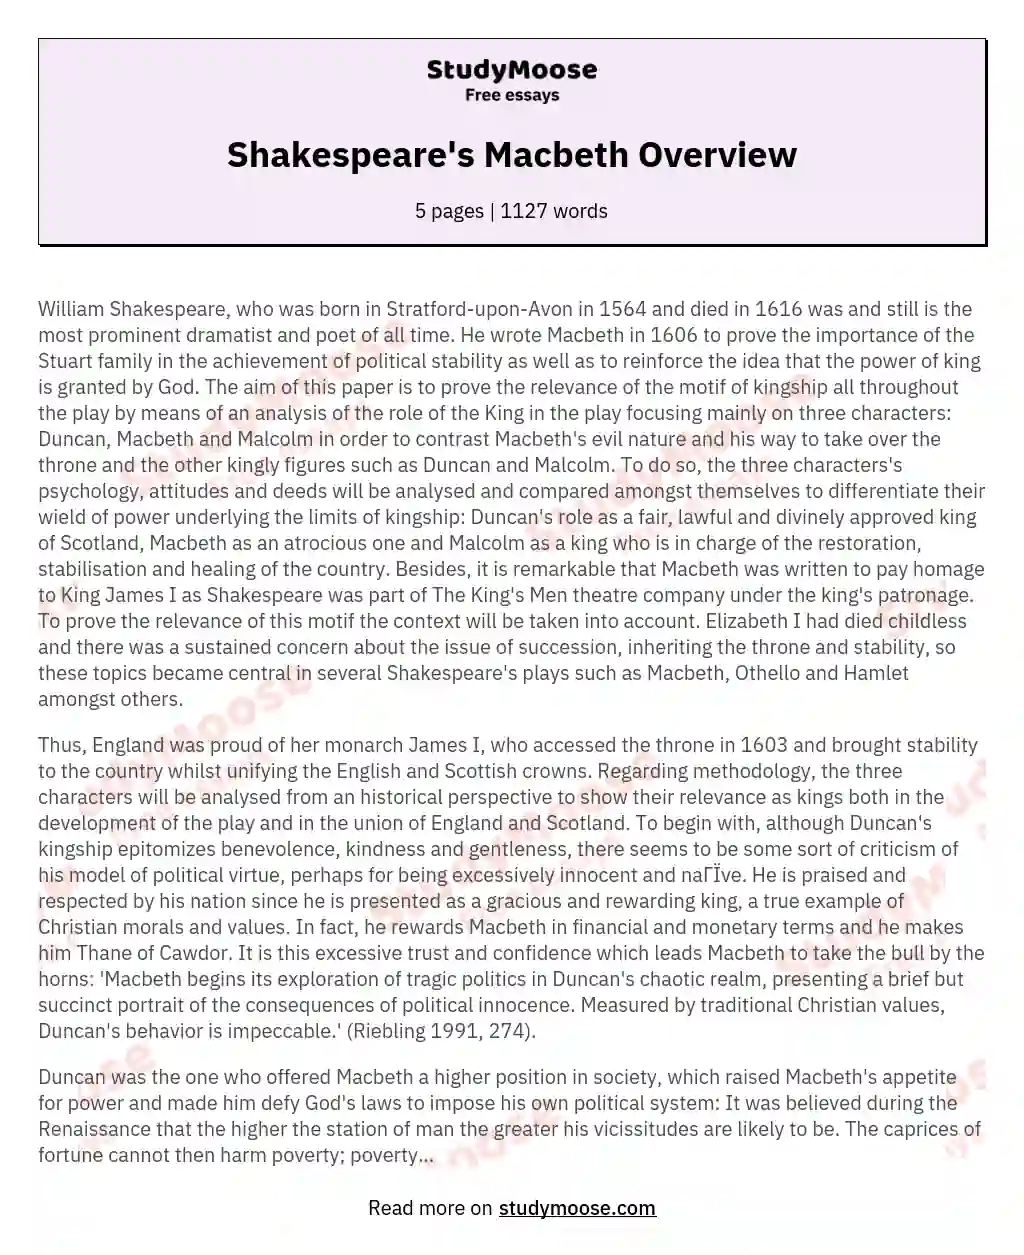 Shakespeare's Macbeth Overview essay